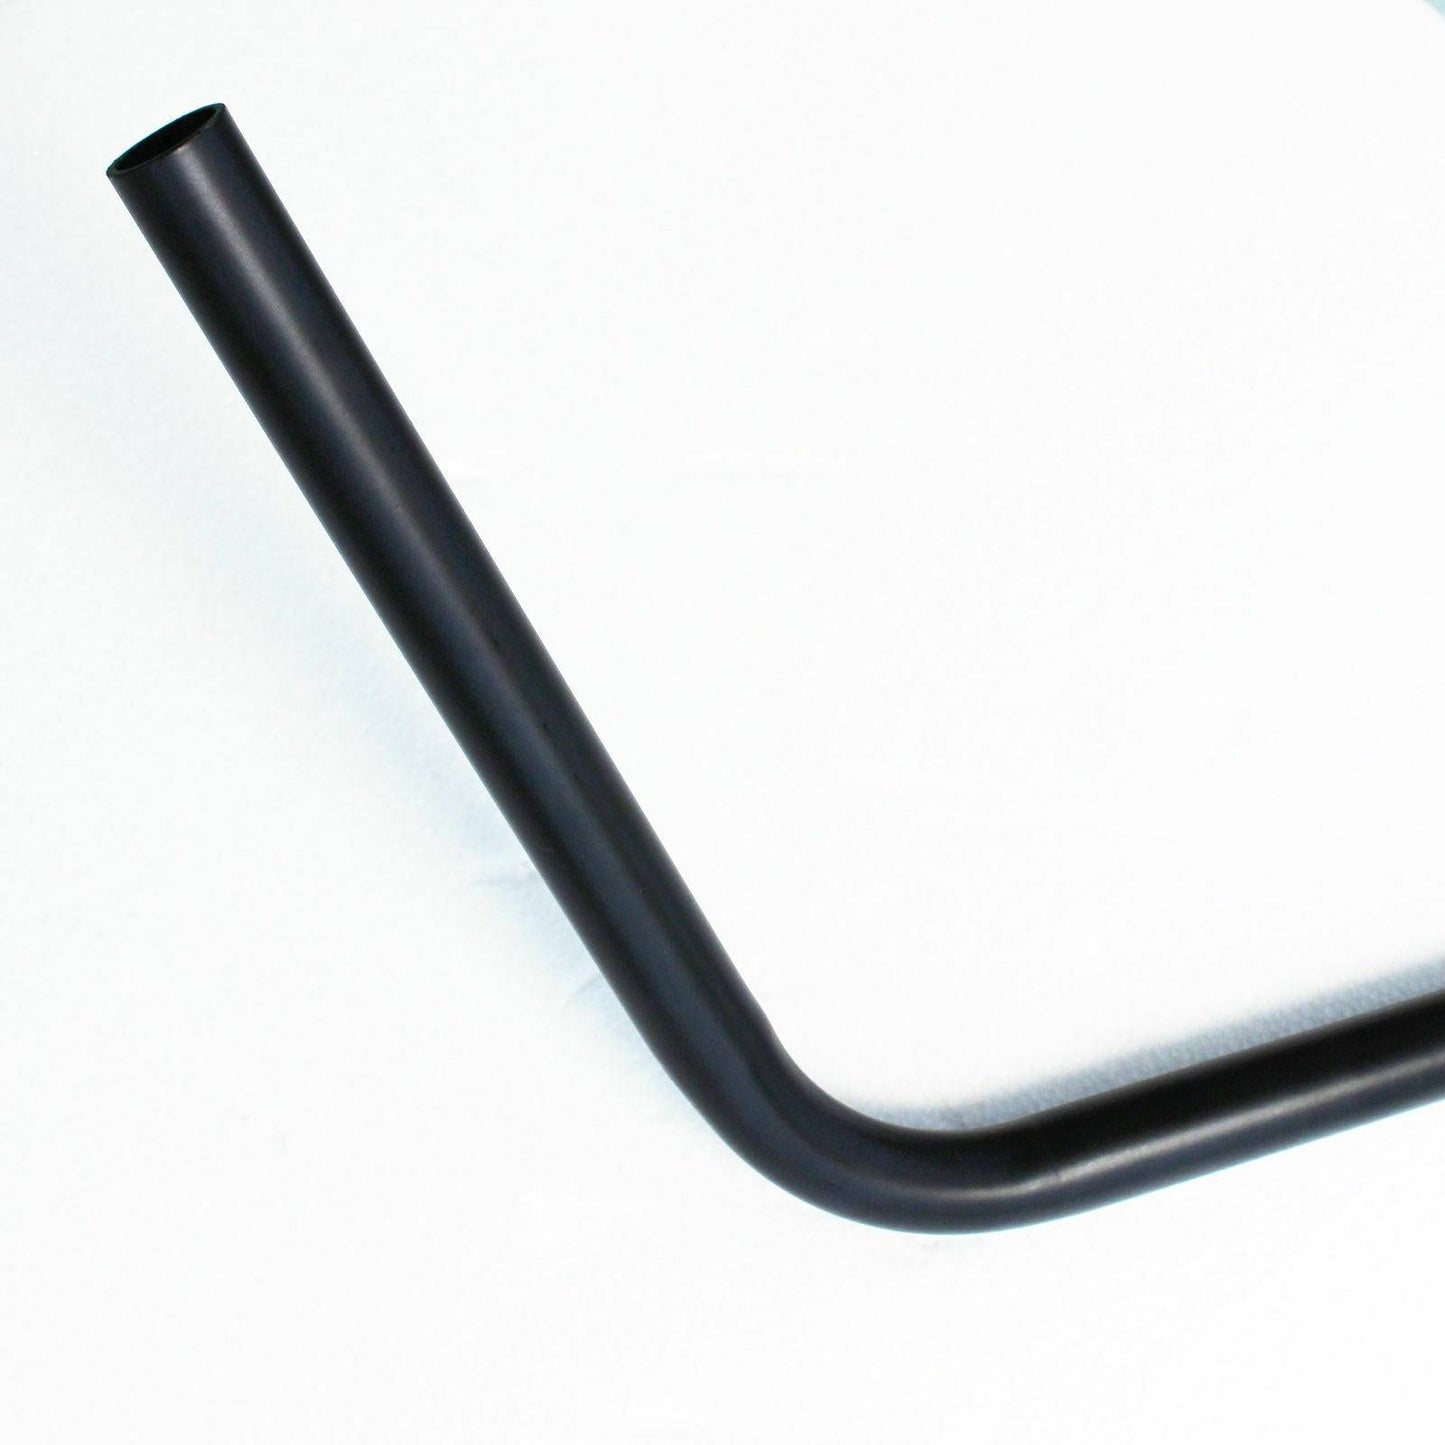 Black 22mm 7/8" Ape hanger Style Handlebar For Bicycle Chopper Motriszed bike - TDRMOTO